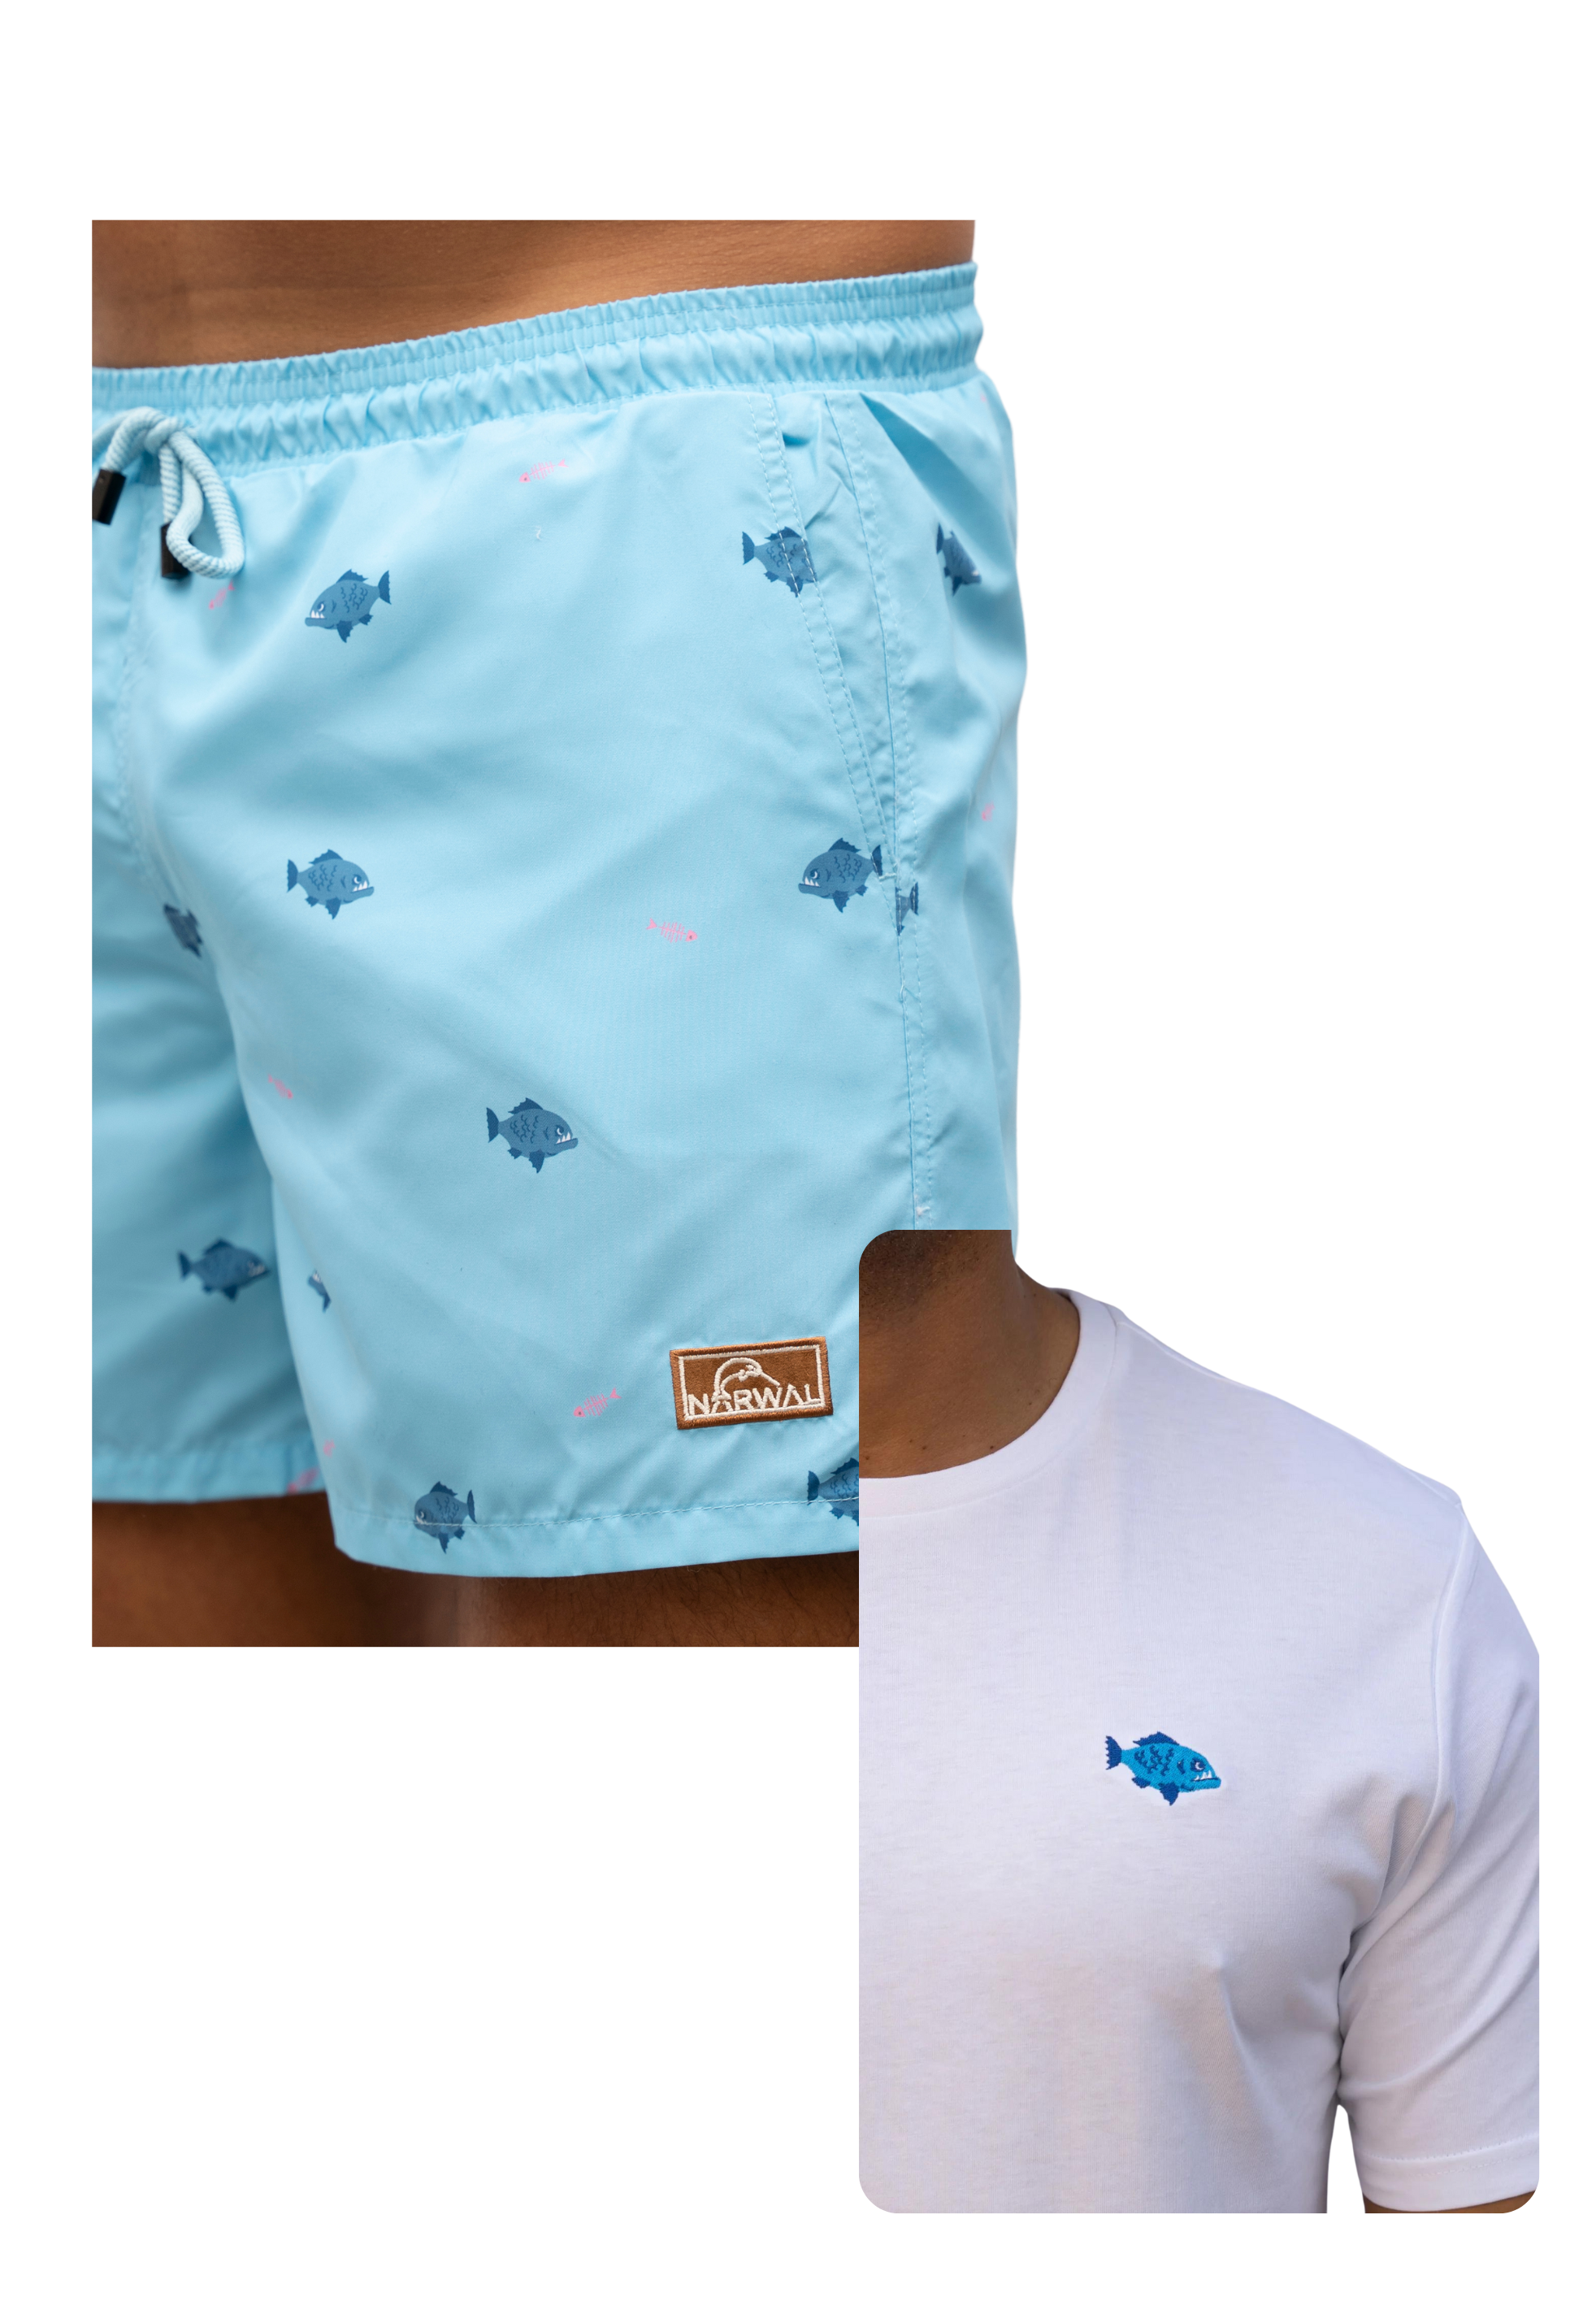 Piranha Swim Trunks & T-shirt Bundle